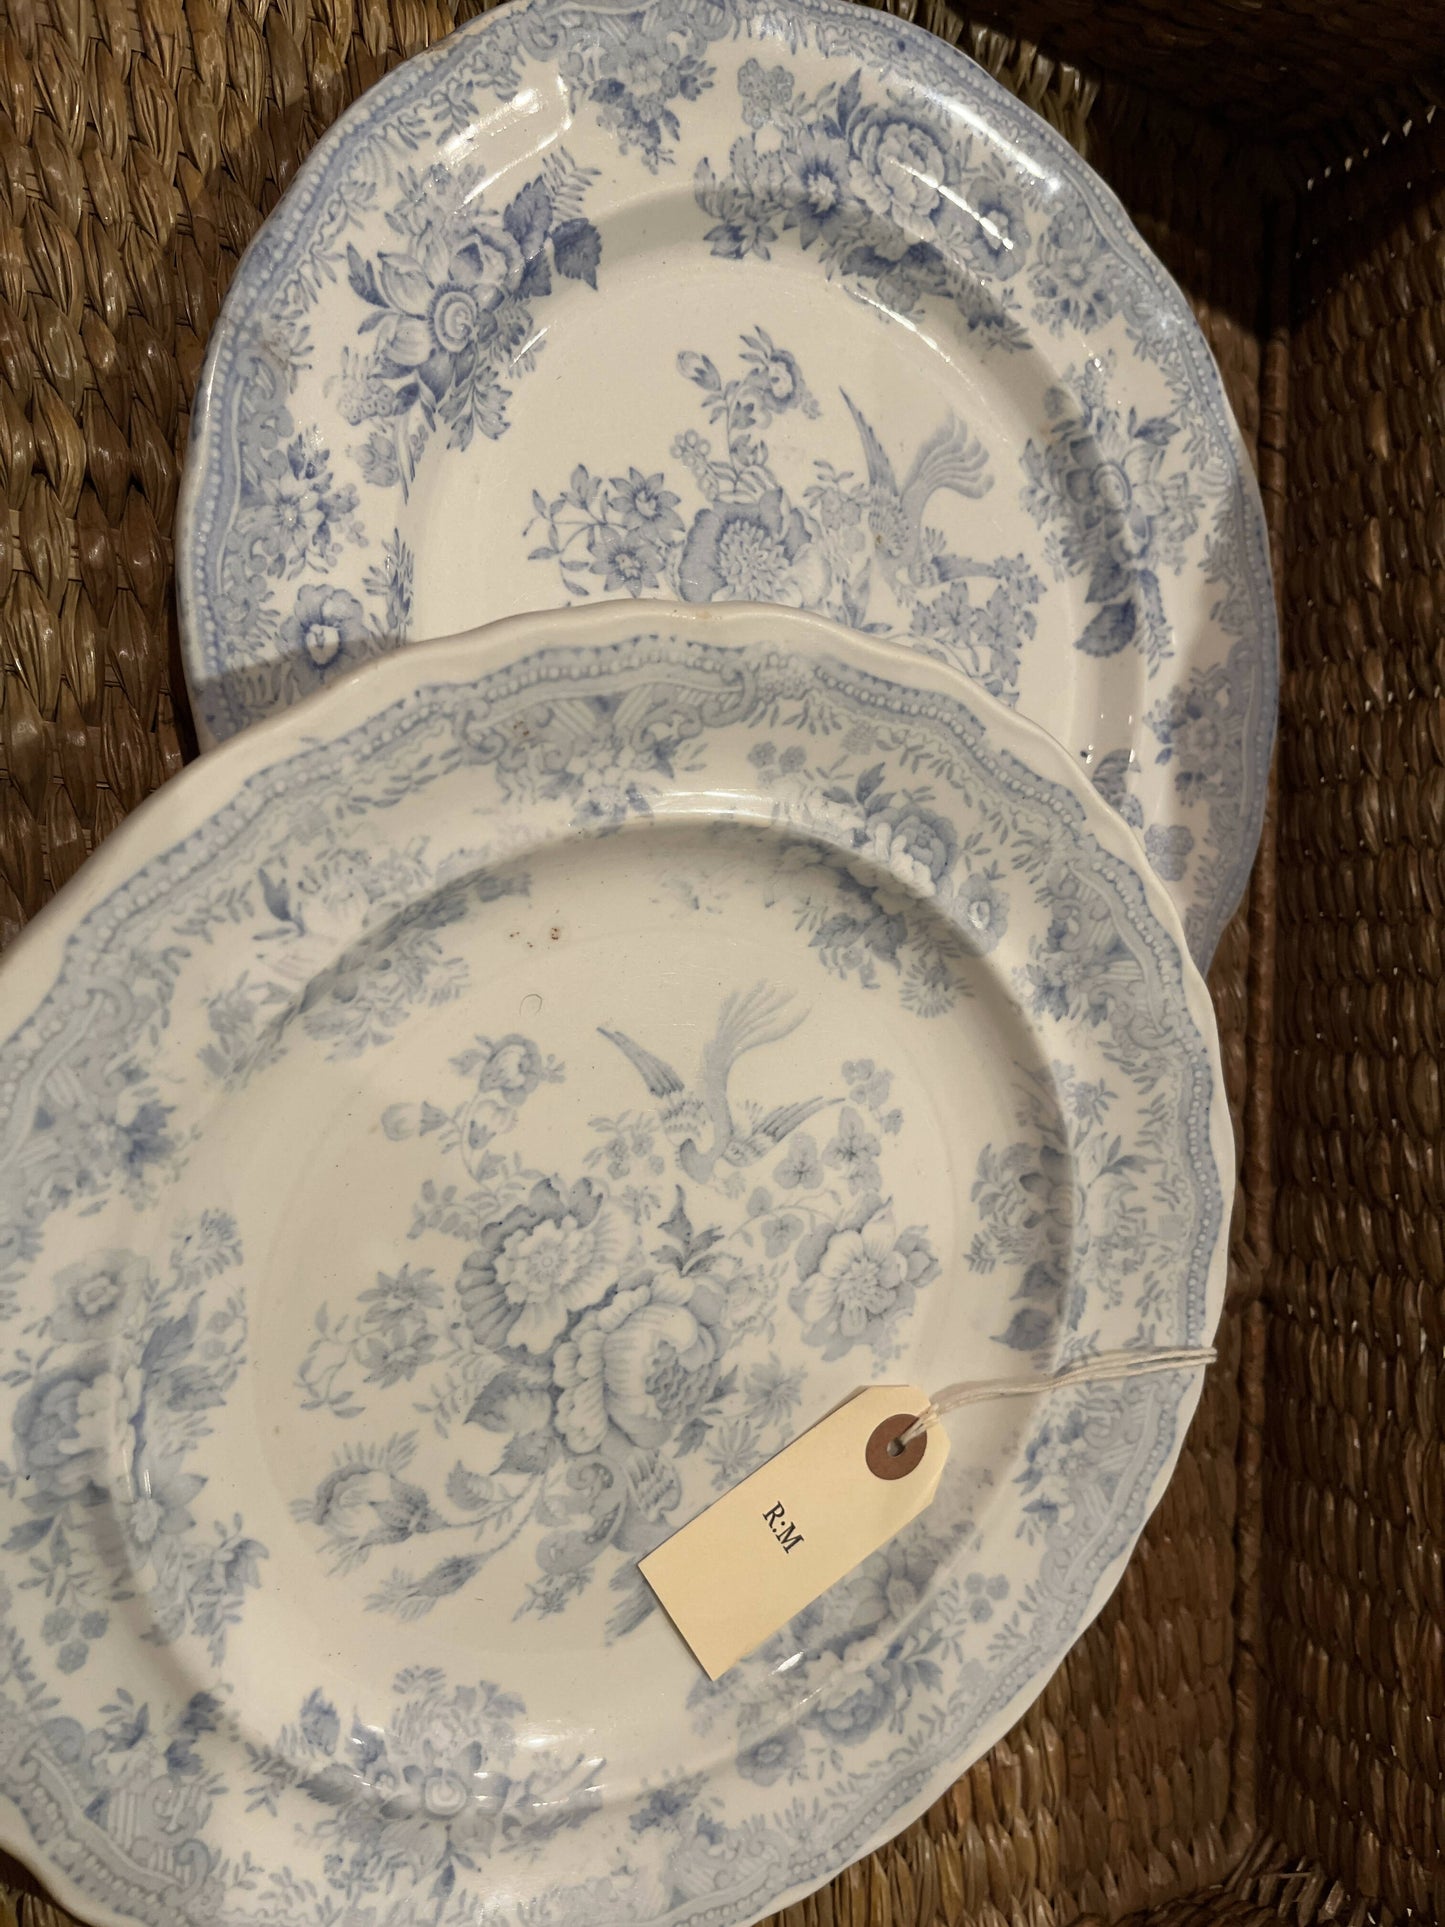 Antique c. 19th century “Asiatic Pheasants” English ironstone dinner plate